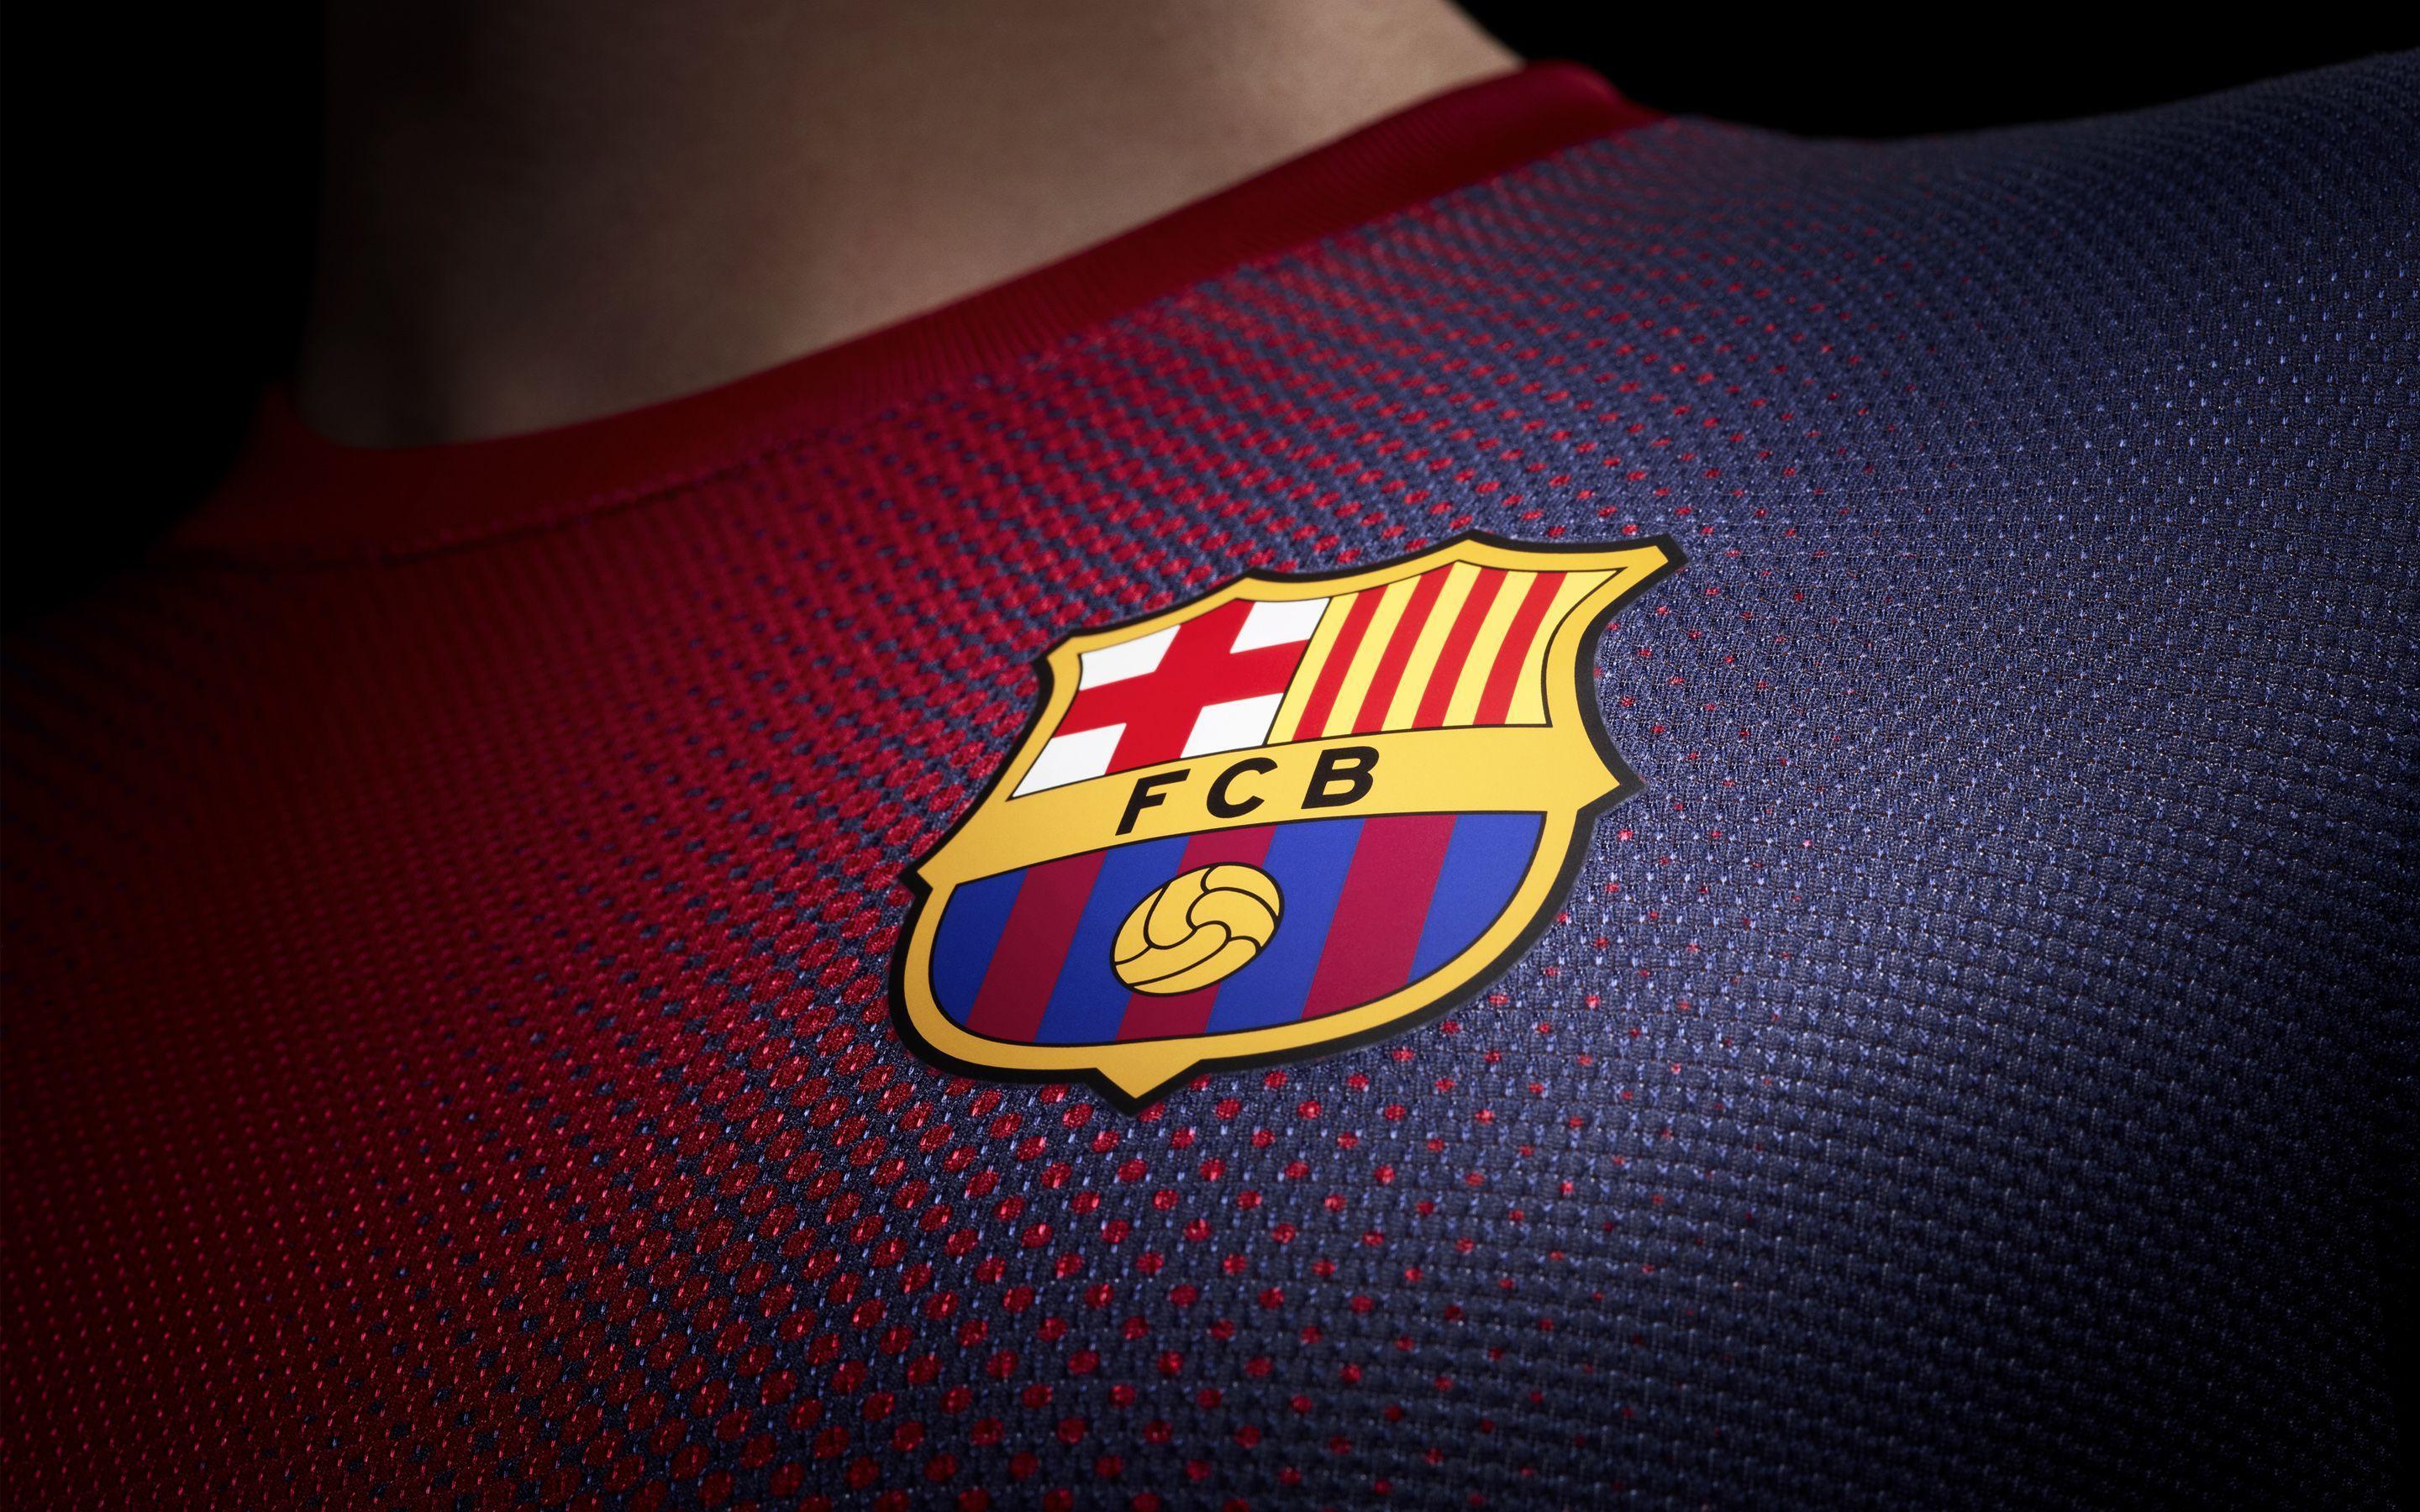 FC Barcelona Logo Wallpaper Download. Wallpaper, Background